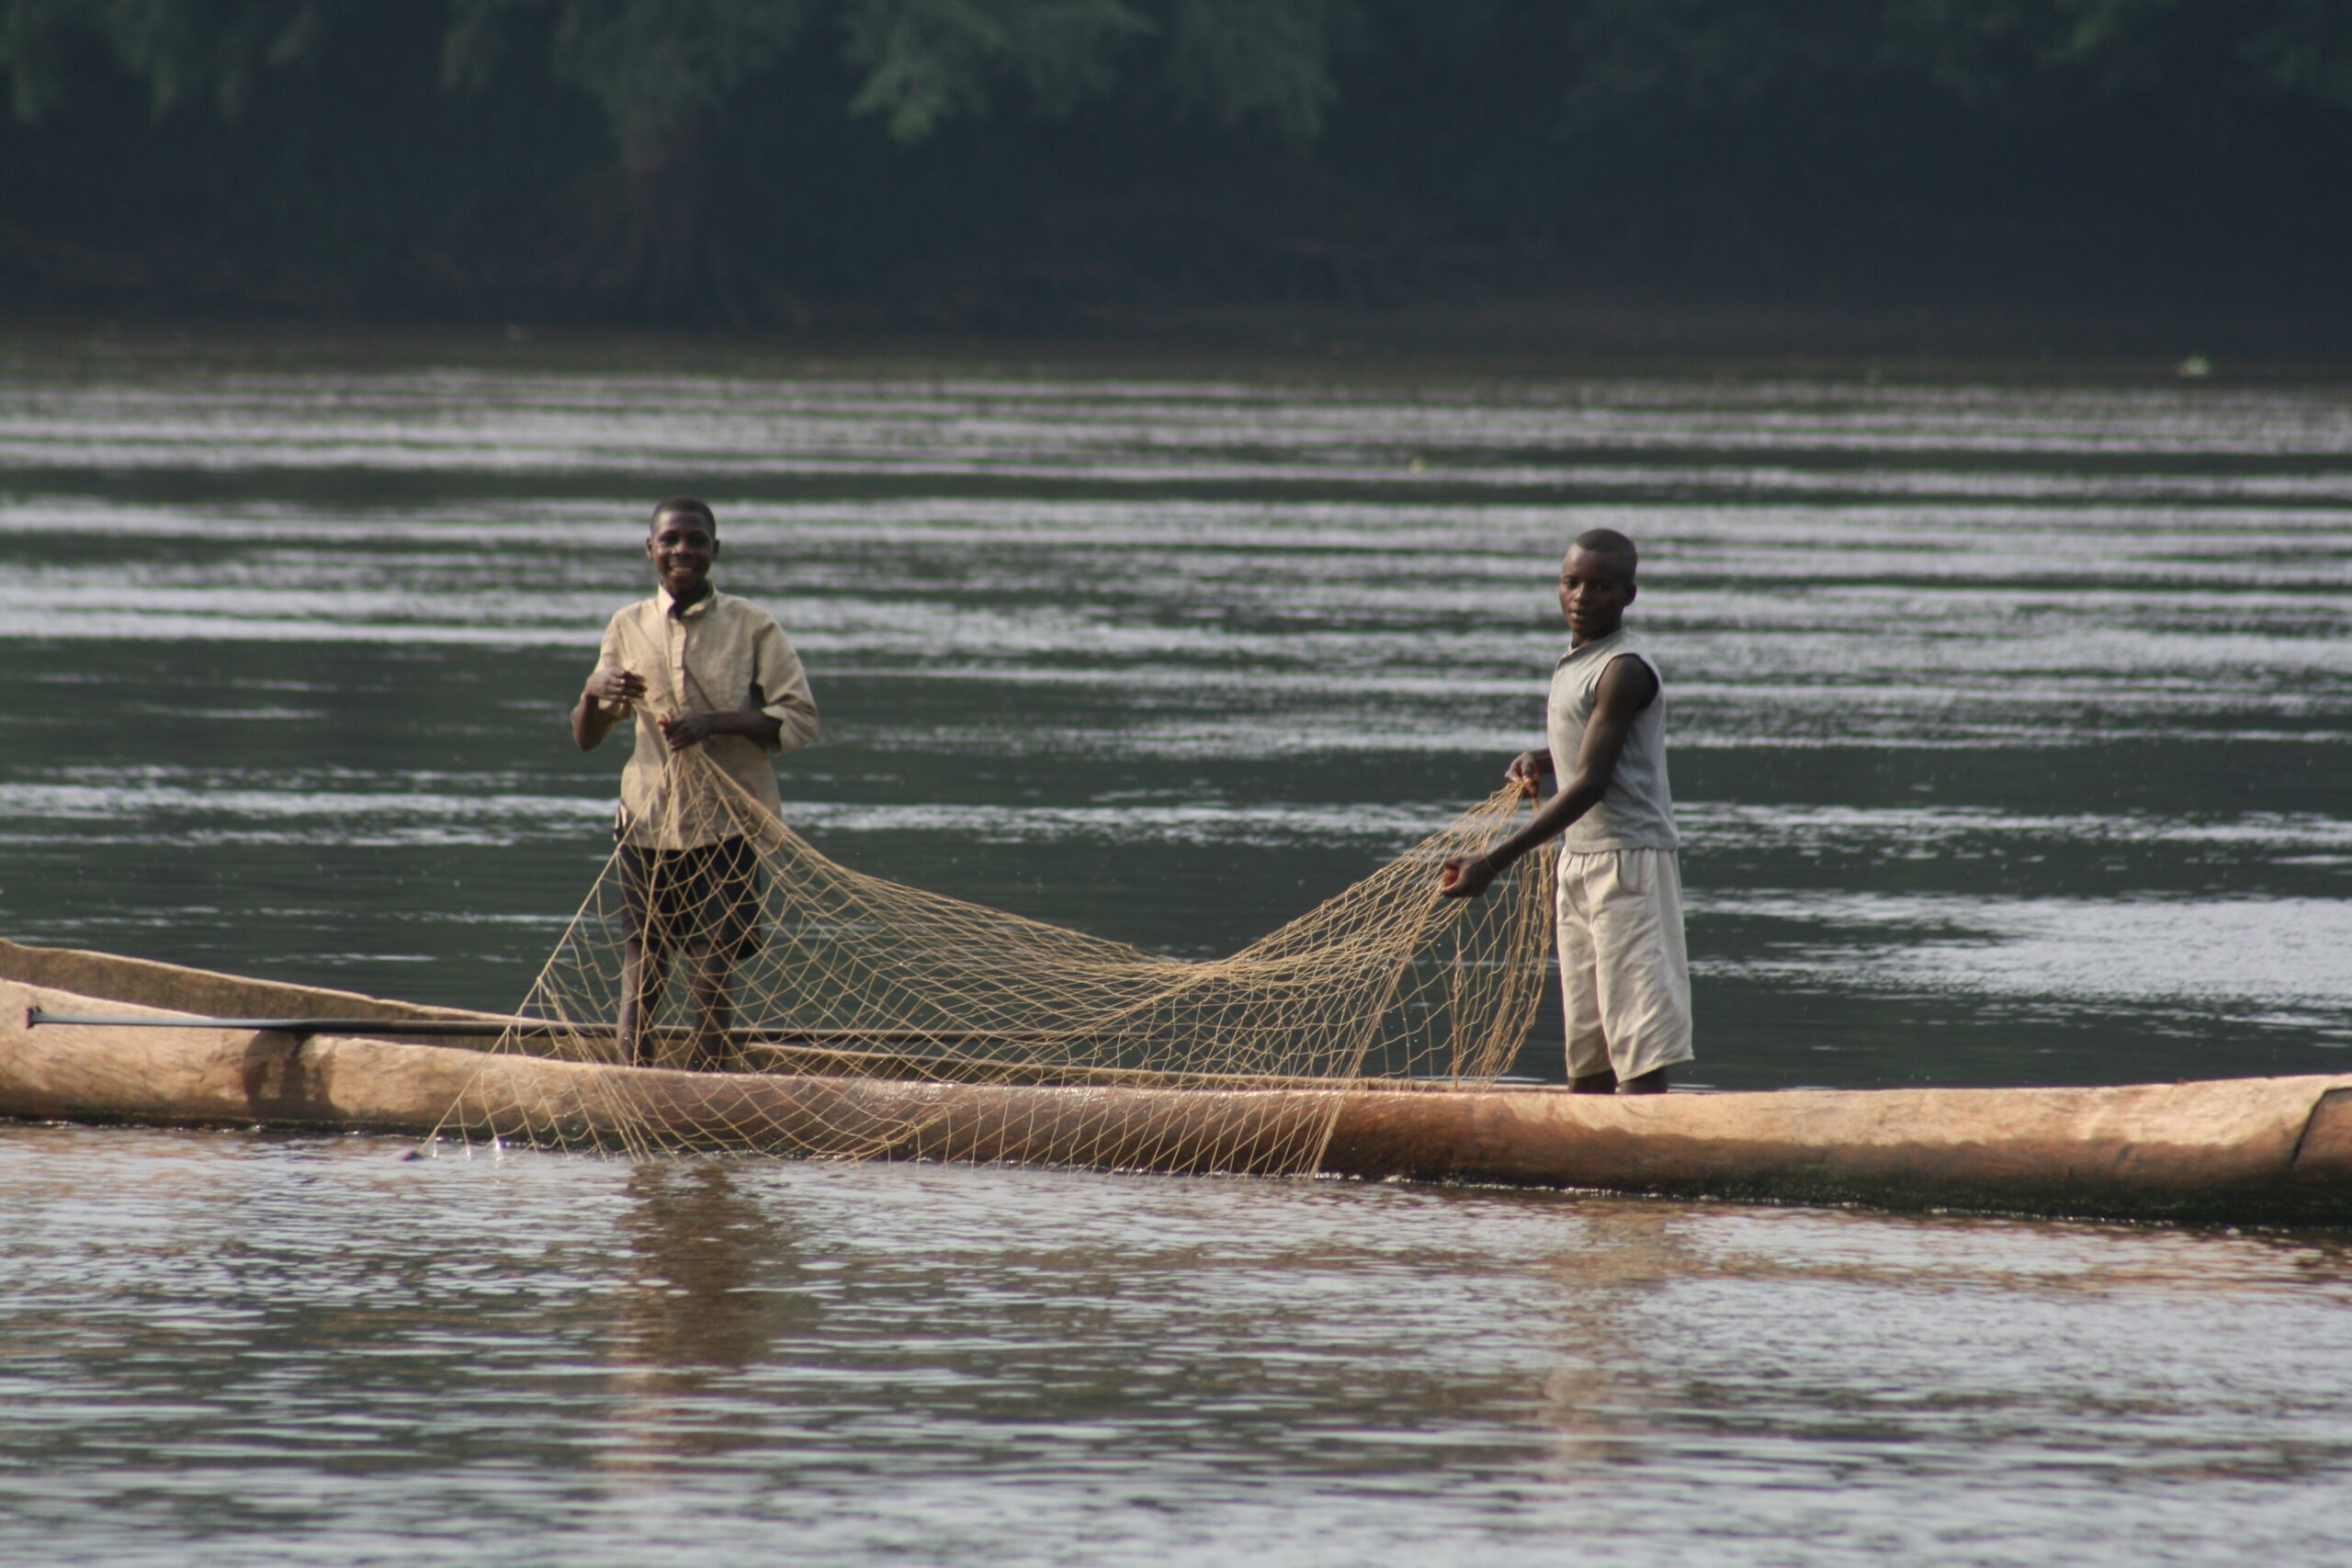 Children fishing with net in pirogue